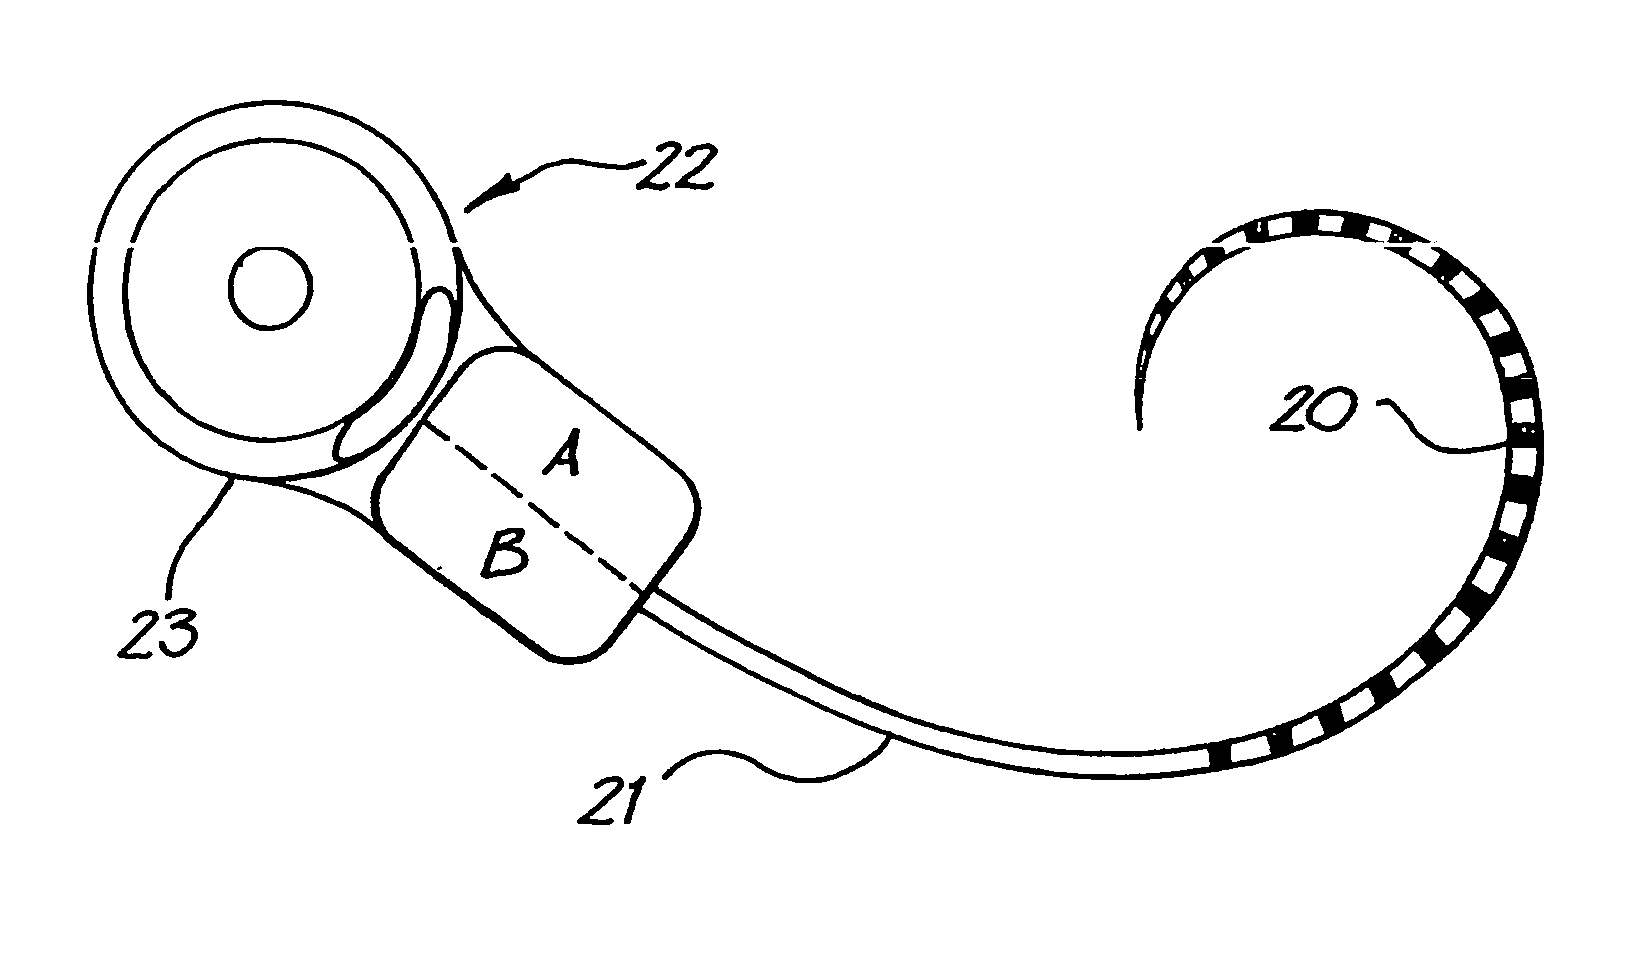 Subthreshold stimulation of a cochlea